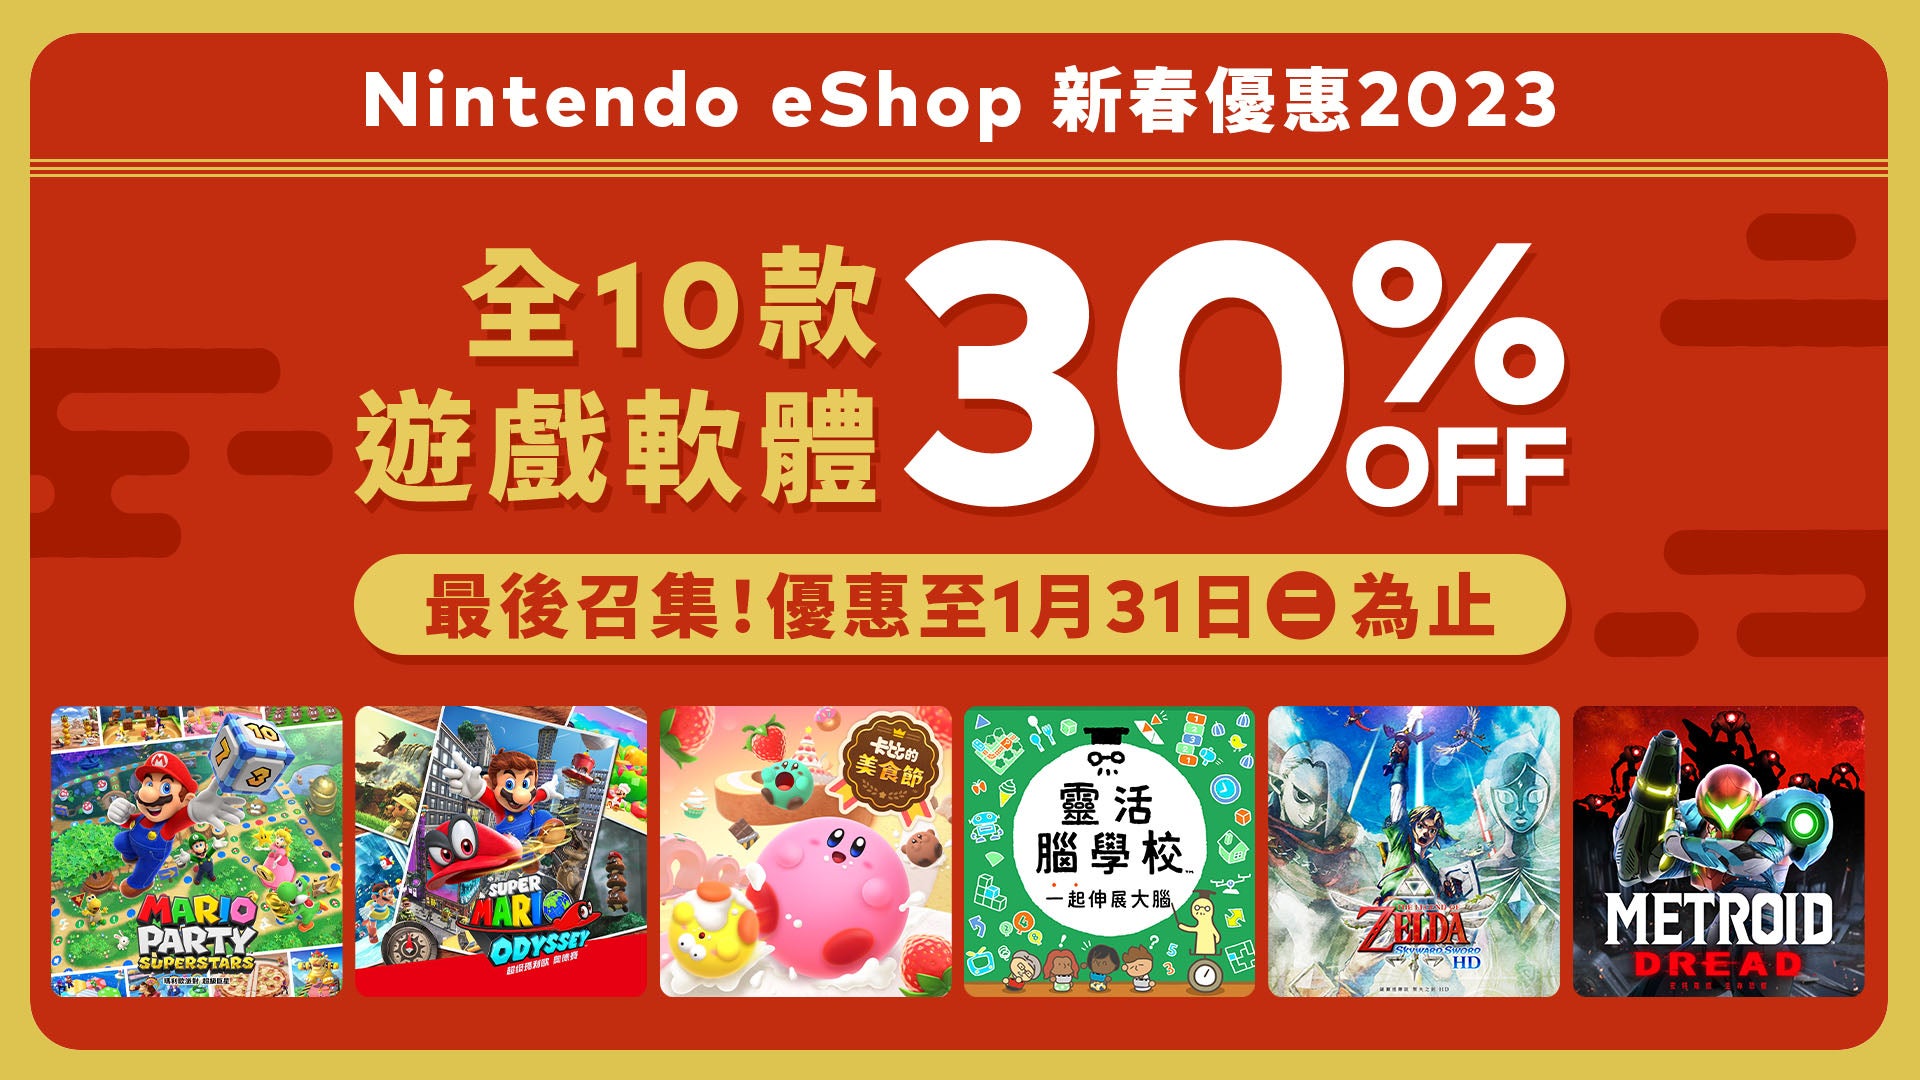 Nintendo eShop「新春優惠2023」將於1月18日（三）開始！10款下載版遊戲軟體將進行30%折扣優惠。 1%title%